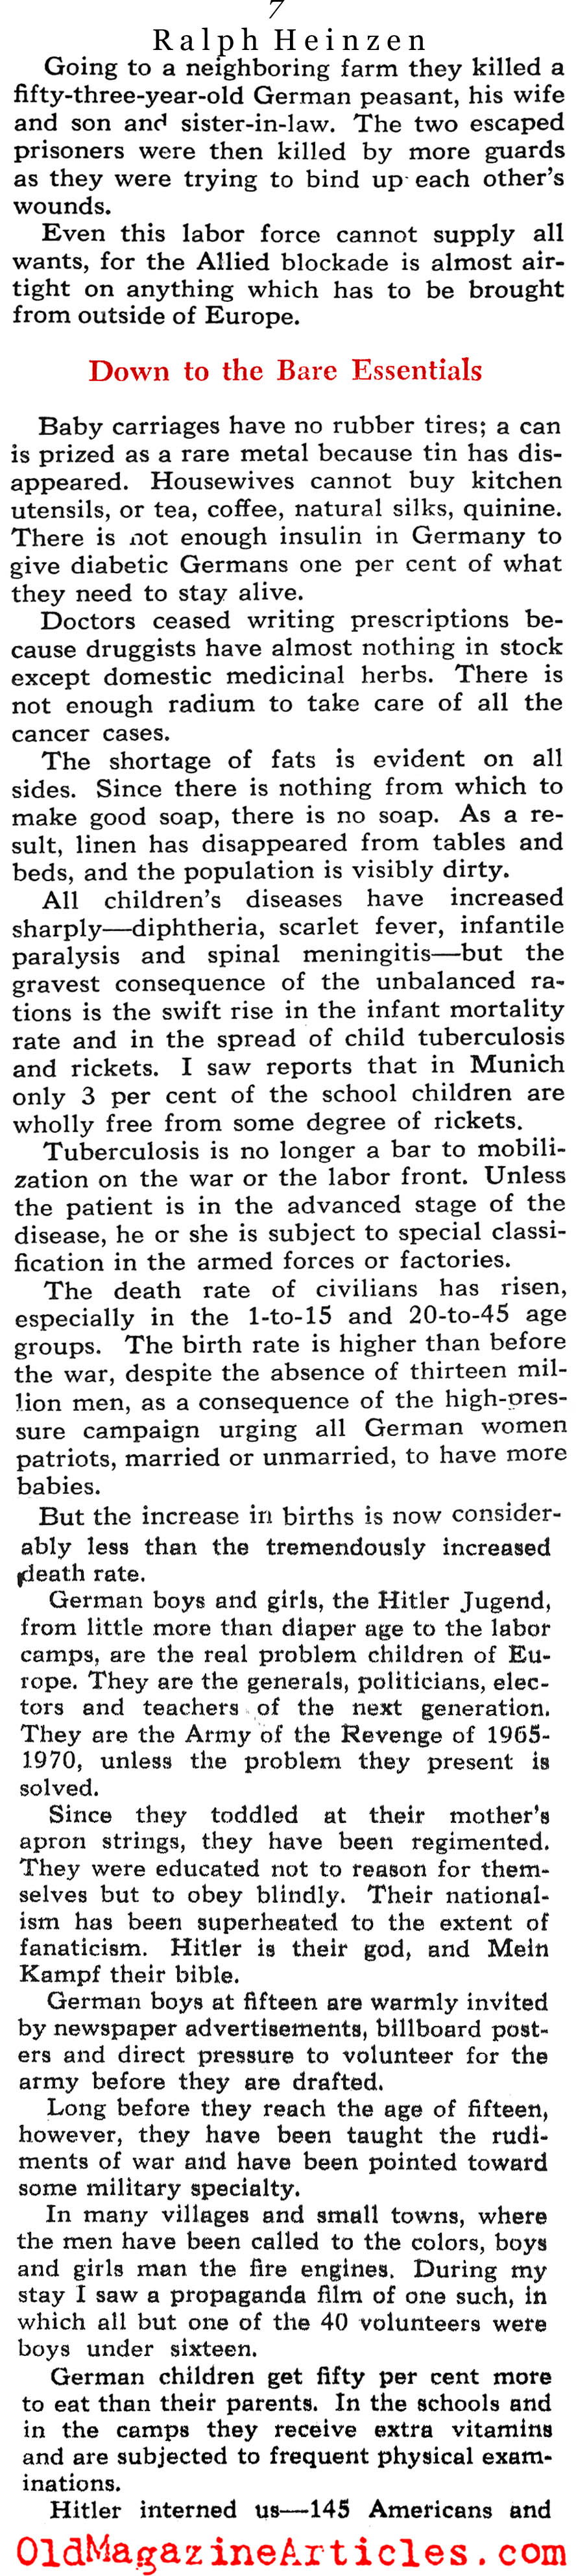 Inside Germany (Collier's Magazine, 1944)